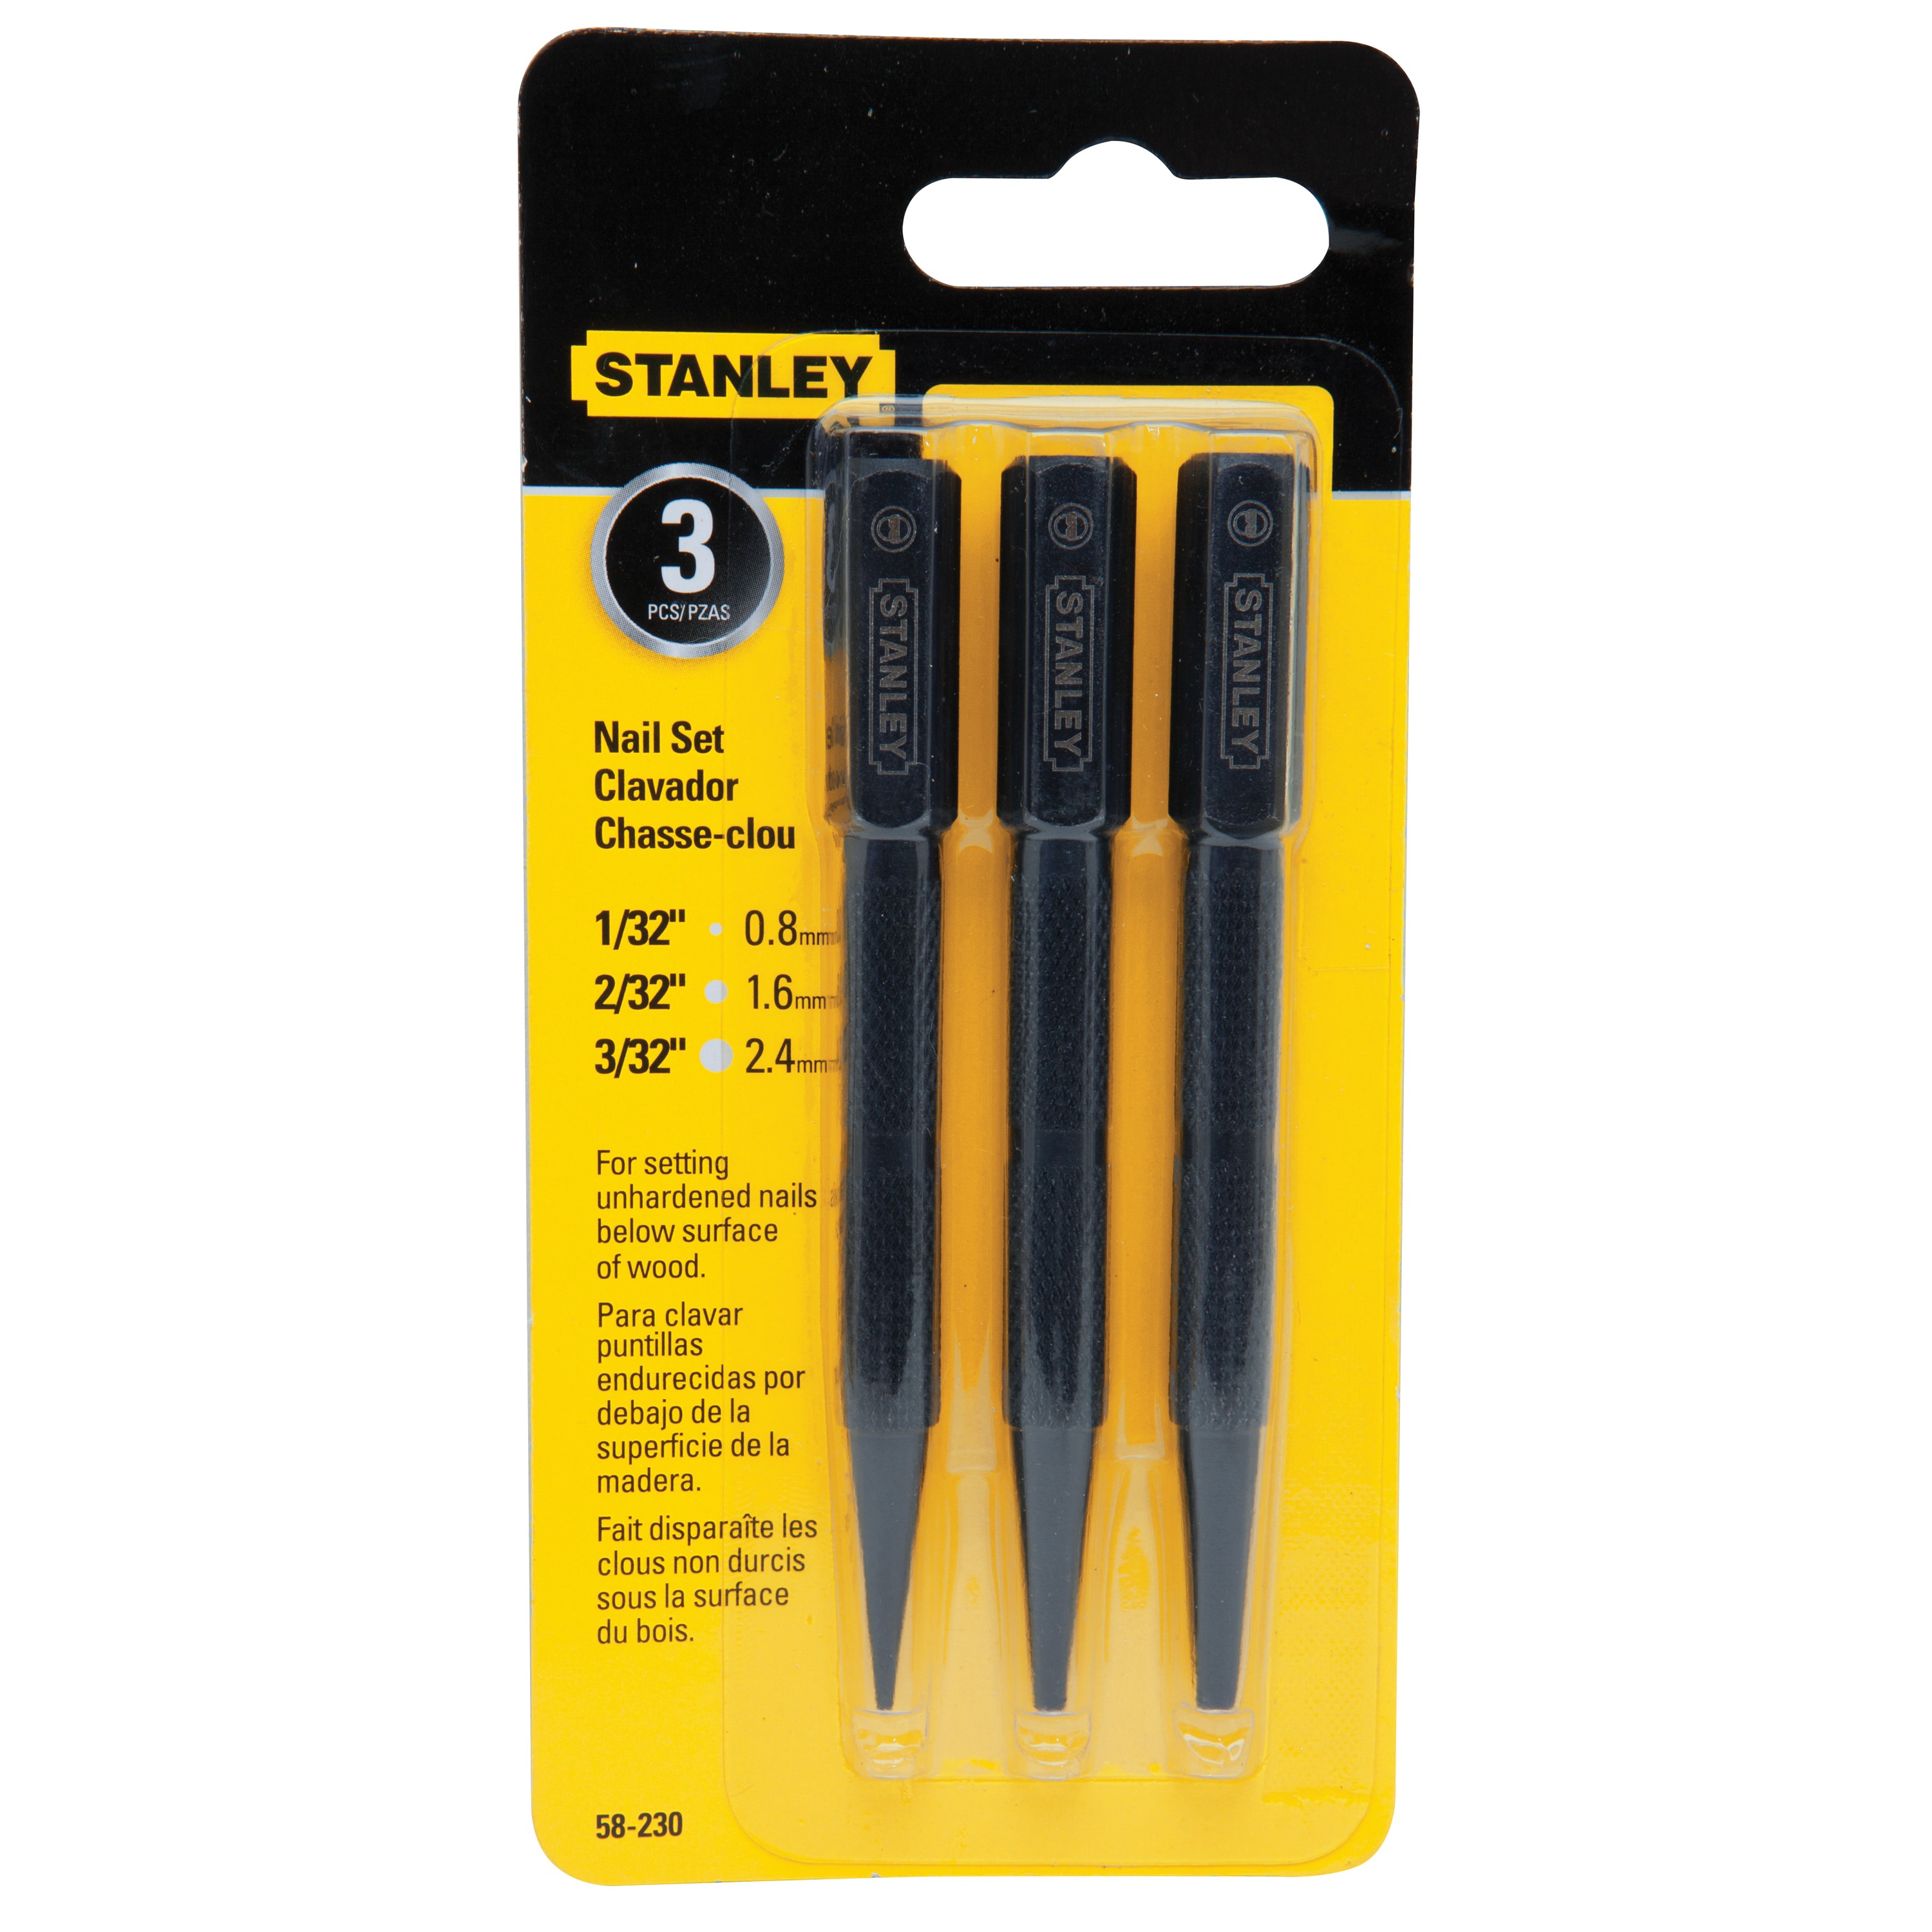 Stanley Tools - 3 pc Steel Nail Set - 58-230